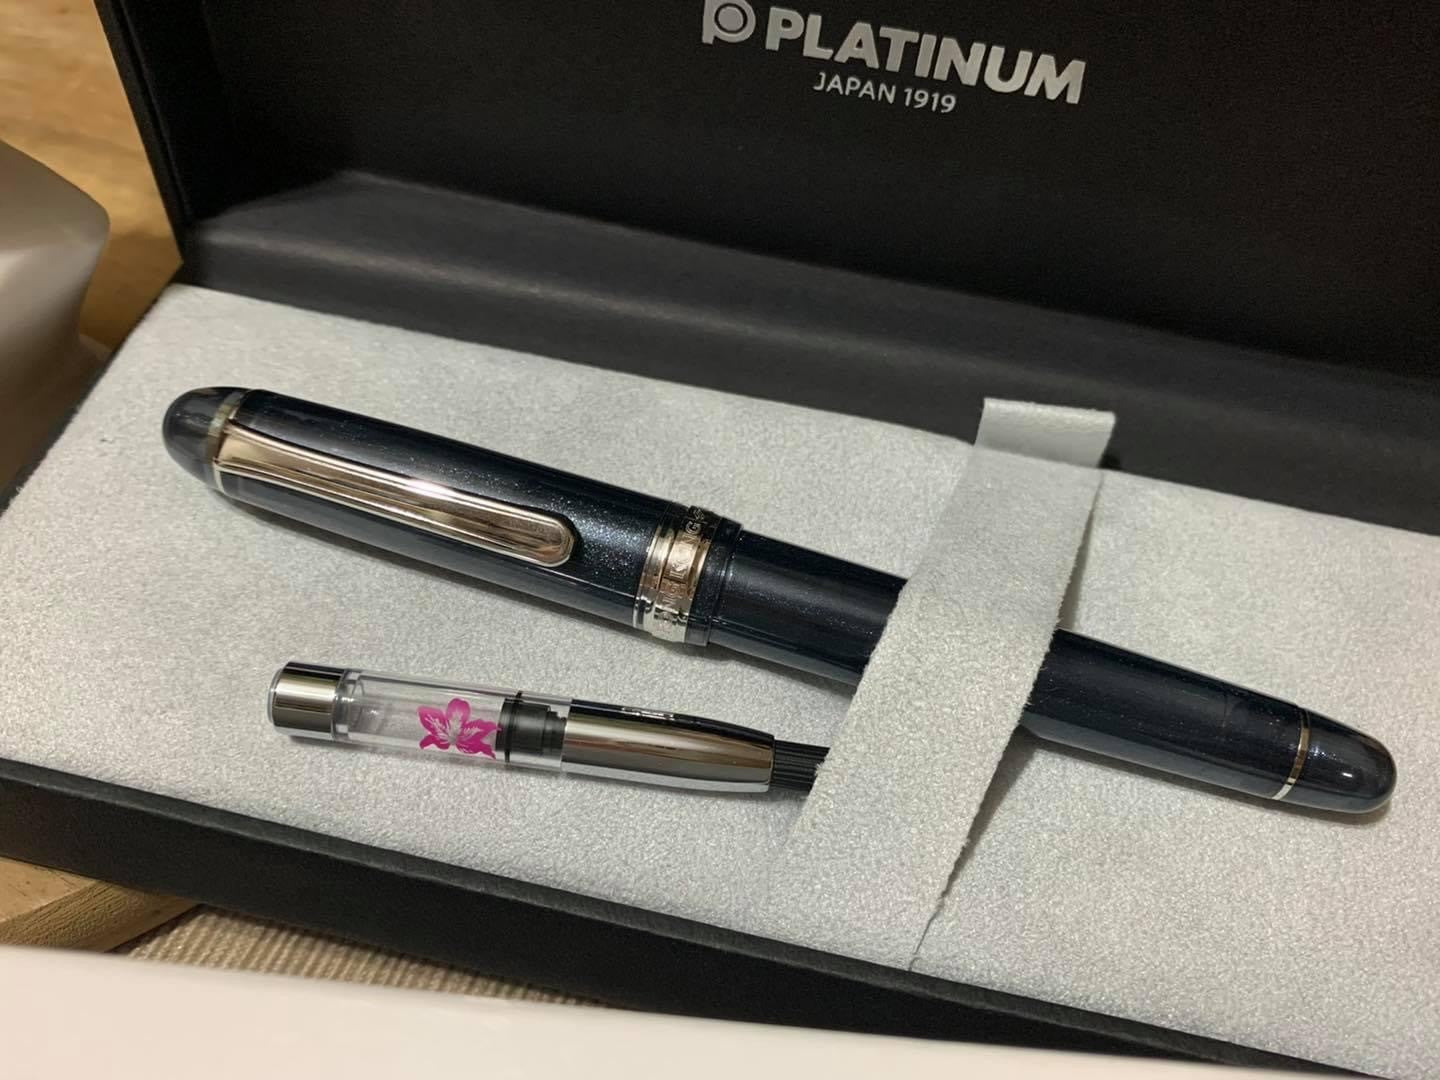 [Special Edition] PLATINUM, Hong Kong Special Edition, #3776 Century, Fountain Pen M Nib